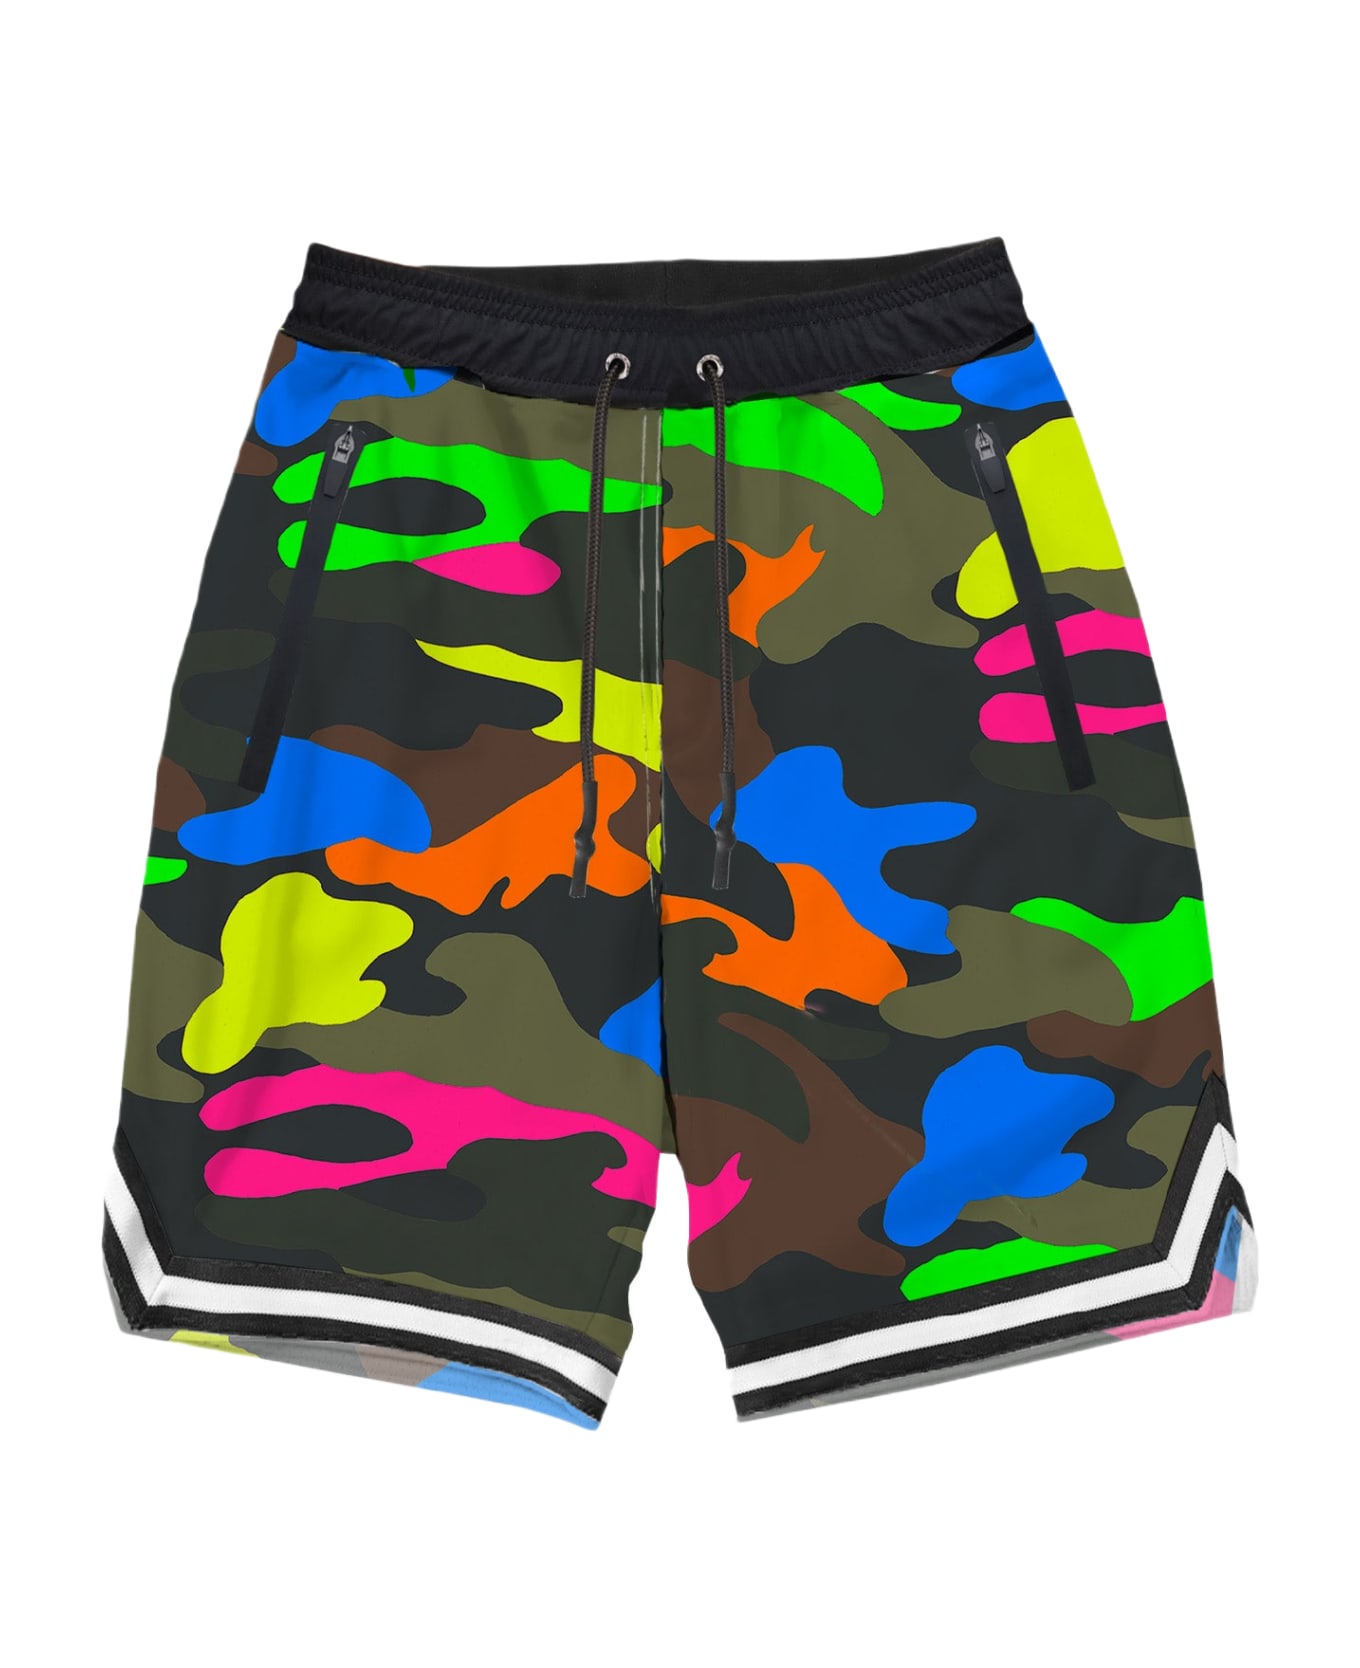 MC2 Saint Barth Camouflage Fluo Multicolor Swim Shorts Surf Style - FLUO